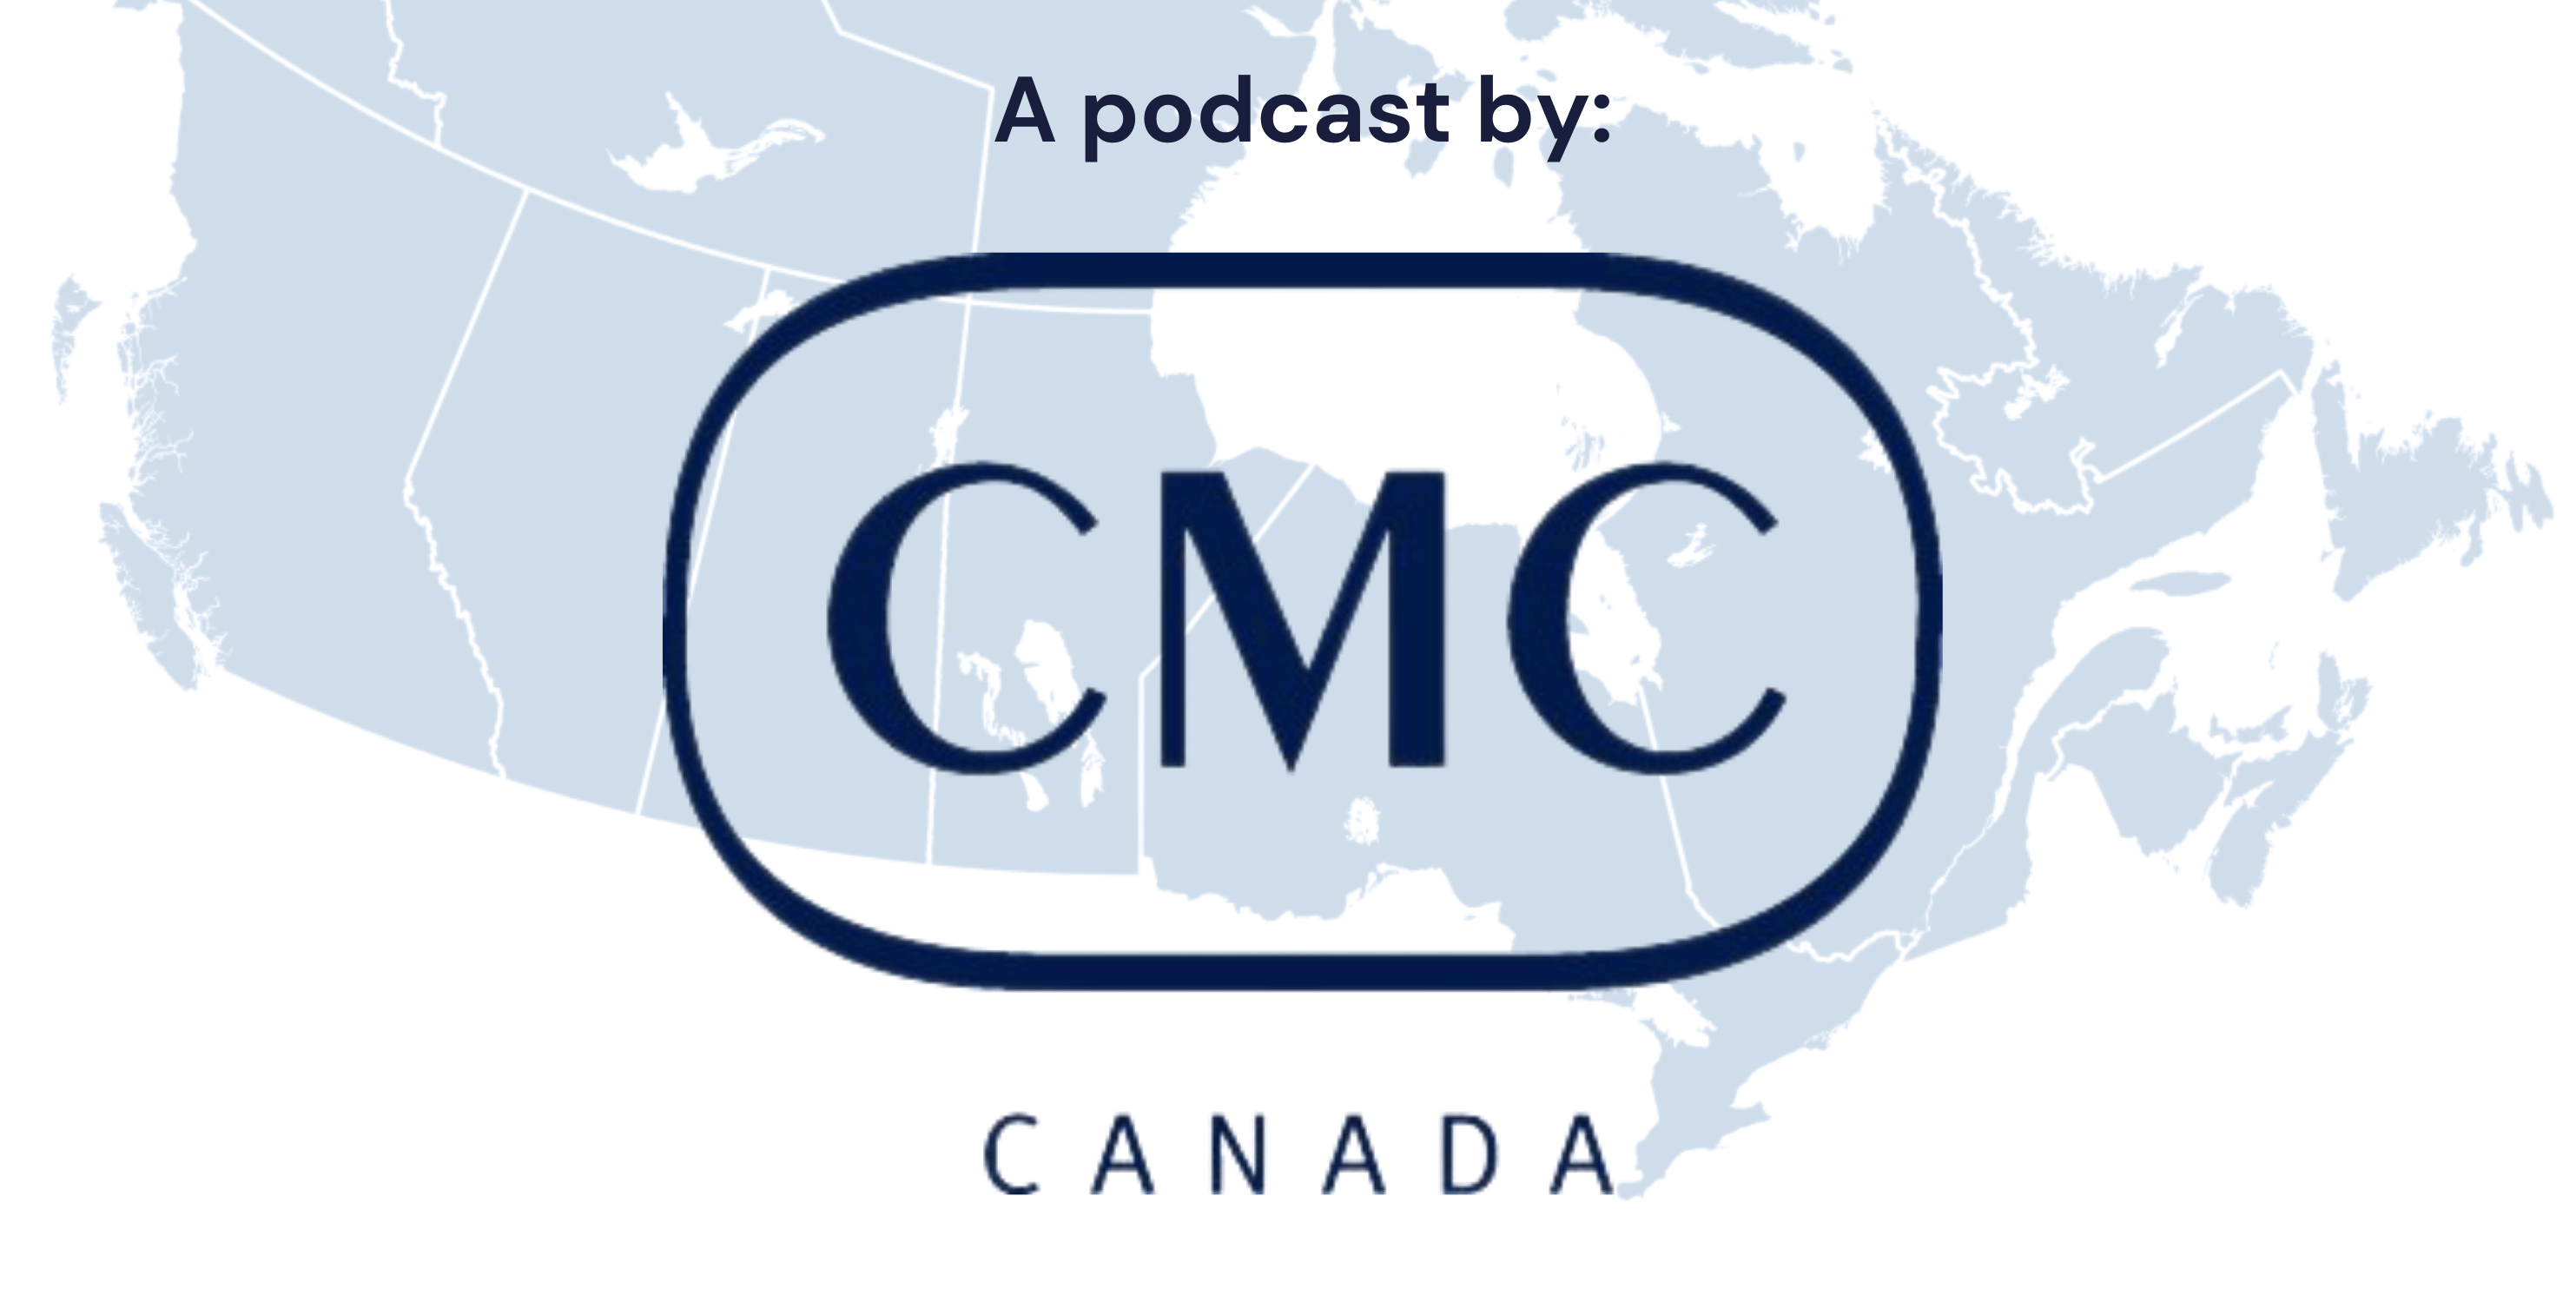 CMC-Canada Podcast: Episode 8 Released